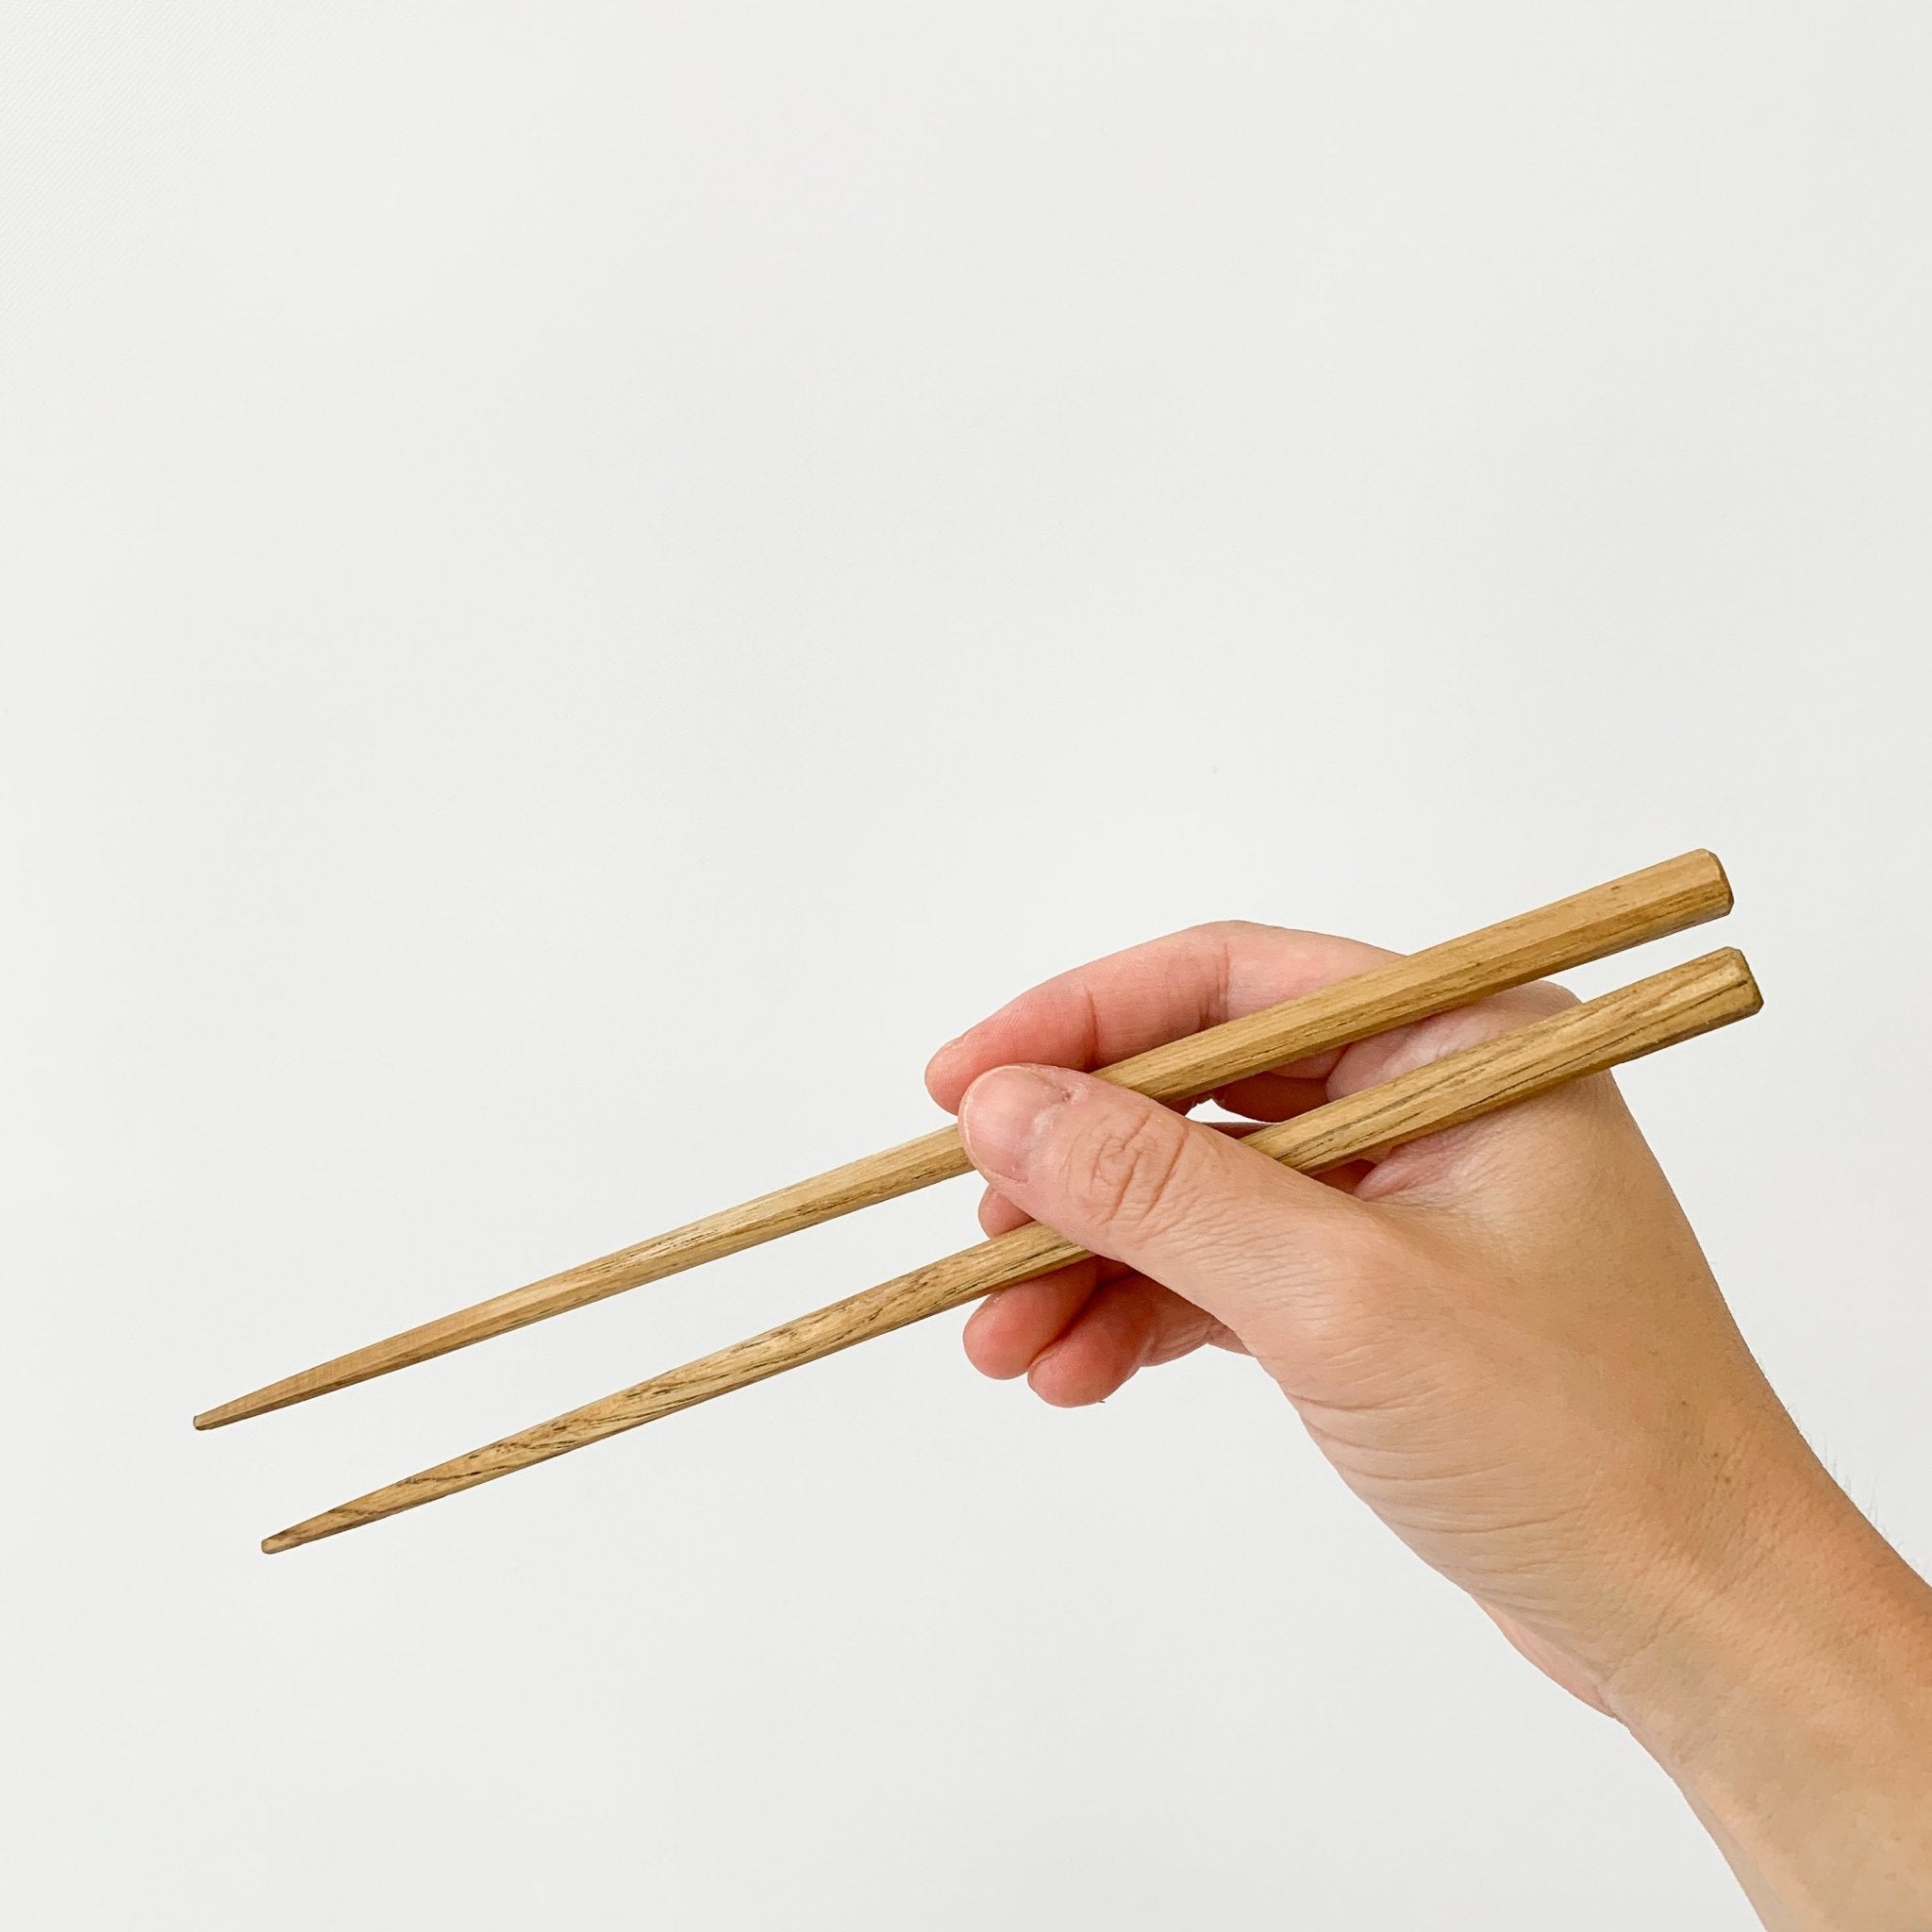 Disposable Pine Wood Chopsticks (Tensoge) 8 2000 pairs/case